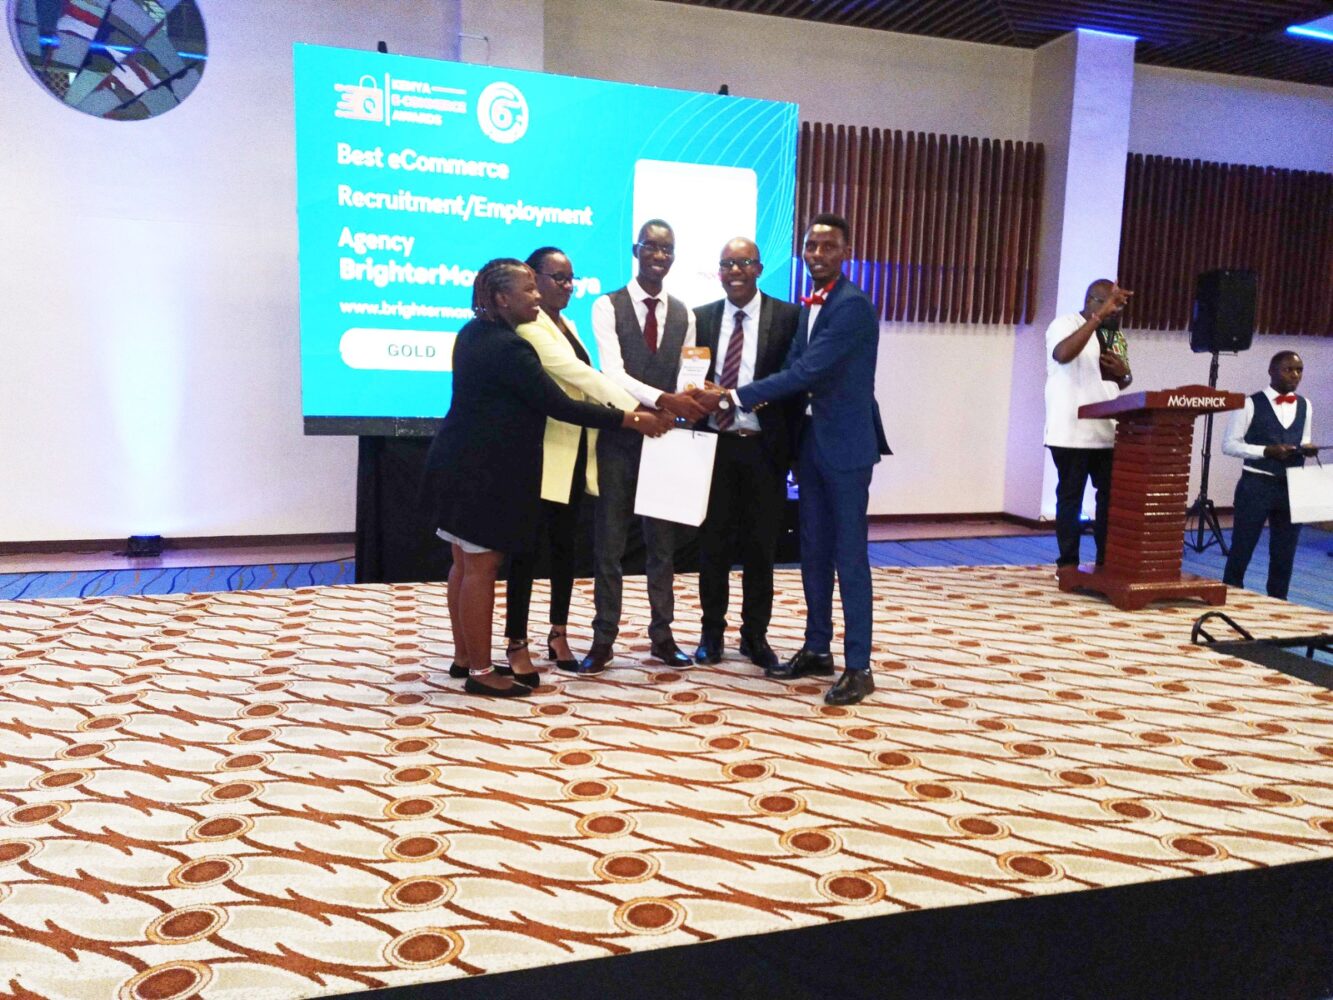 BrighterMonday Wins Best Ecommerce Recruitment/Employment Agency at Kenya E-Commerce Awards 2024